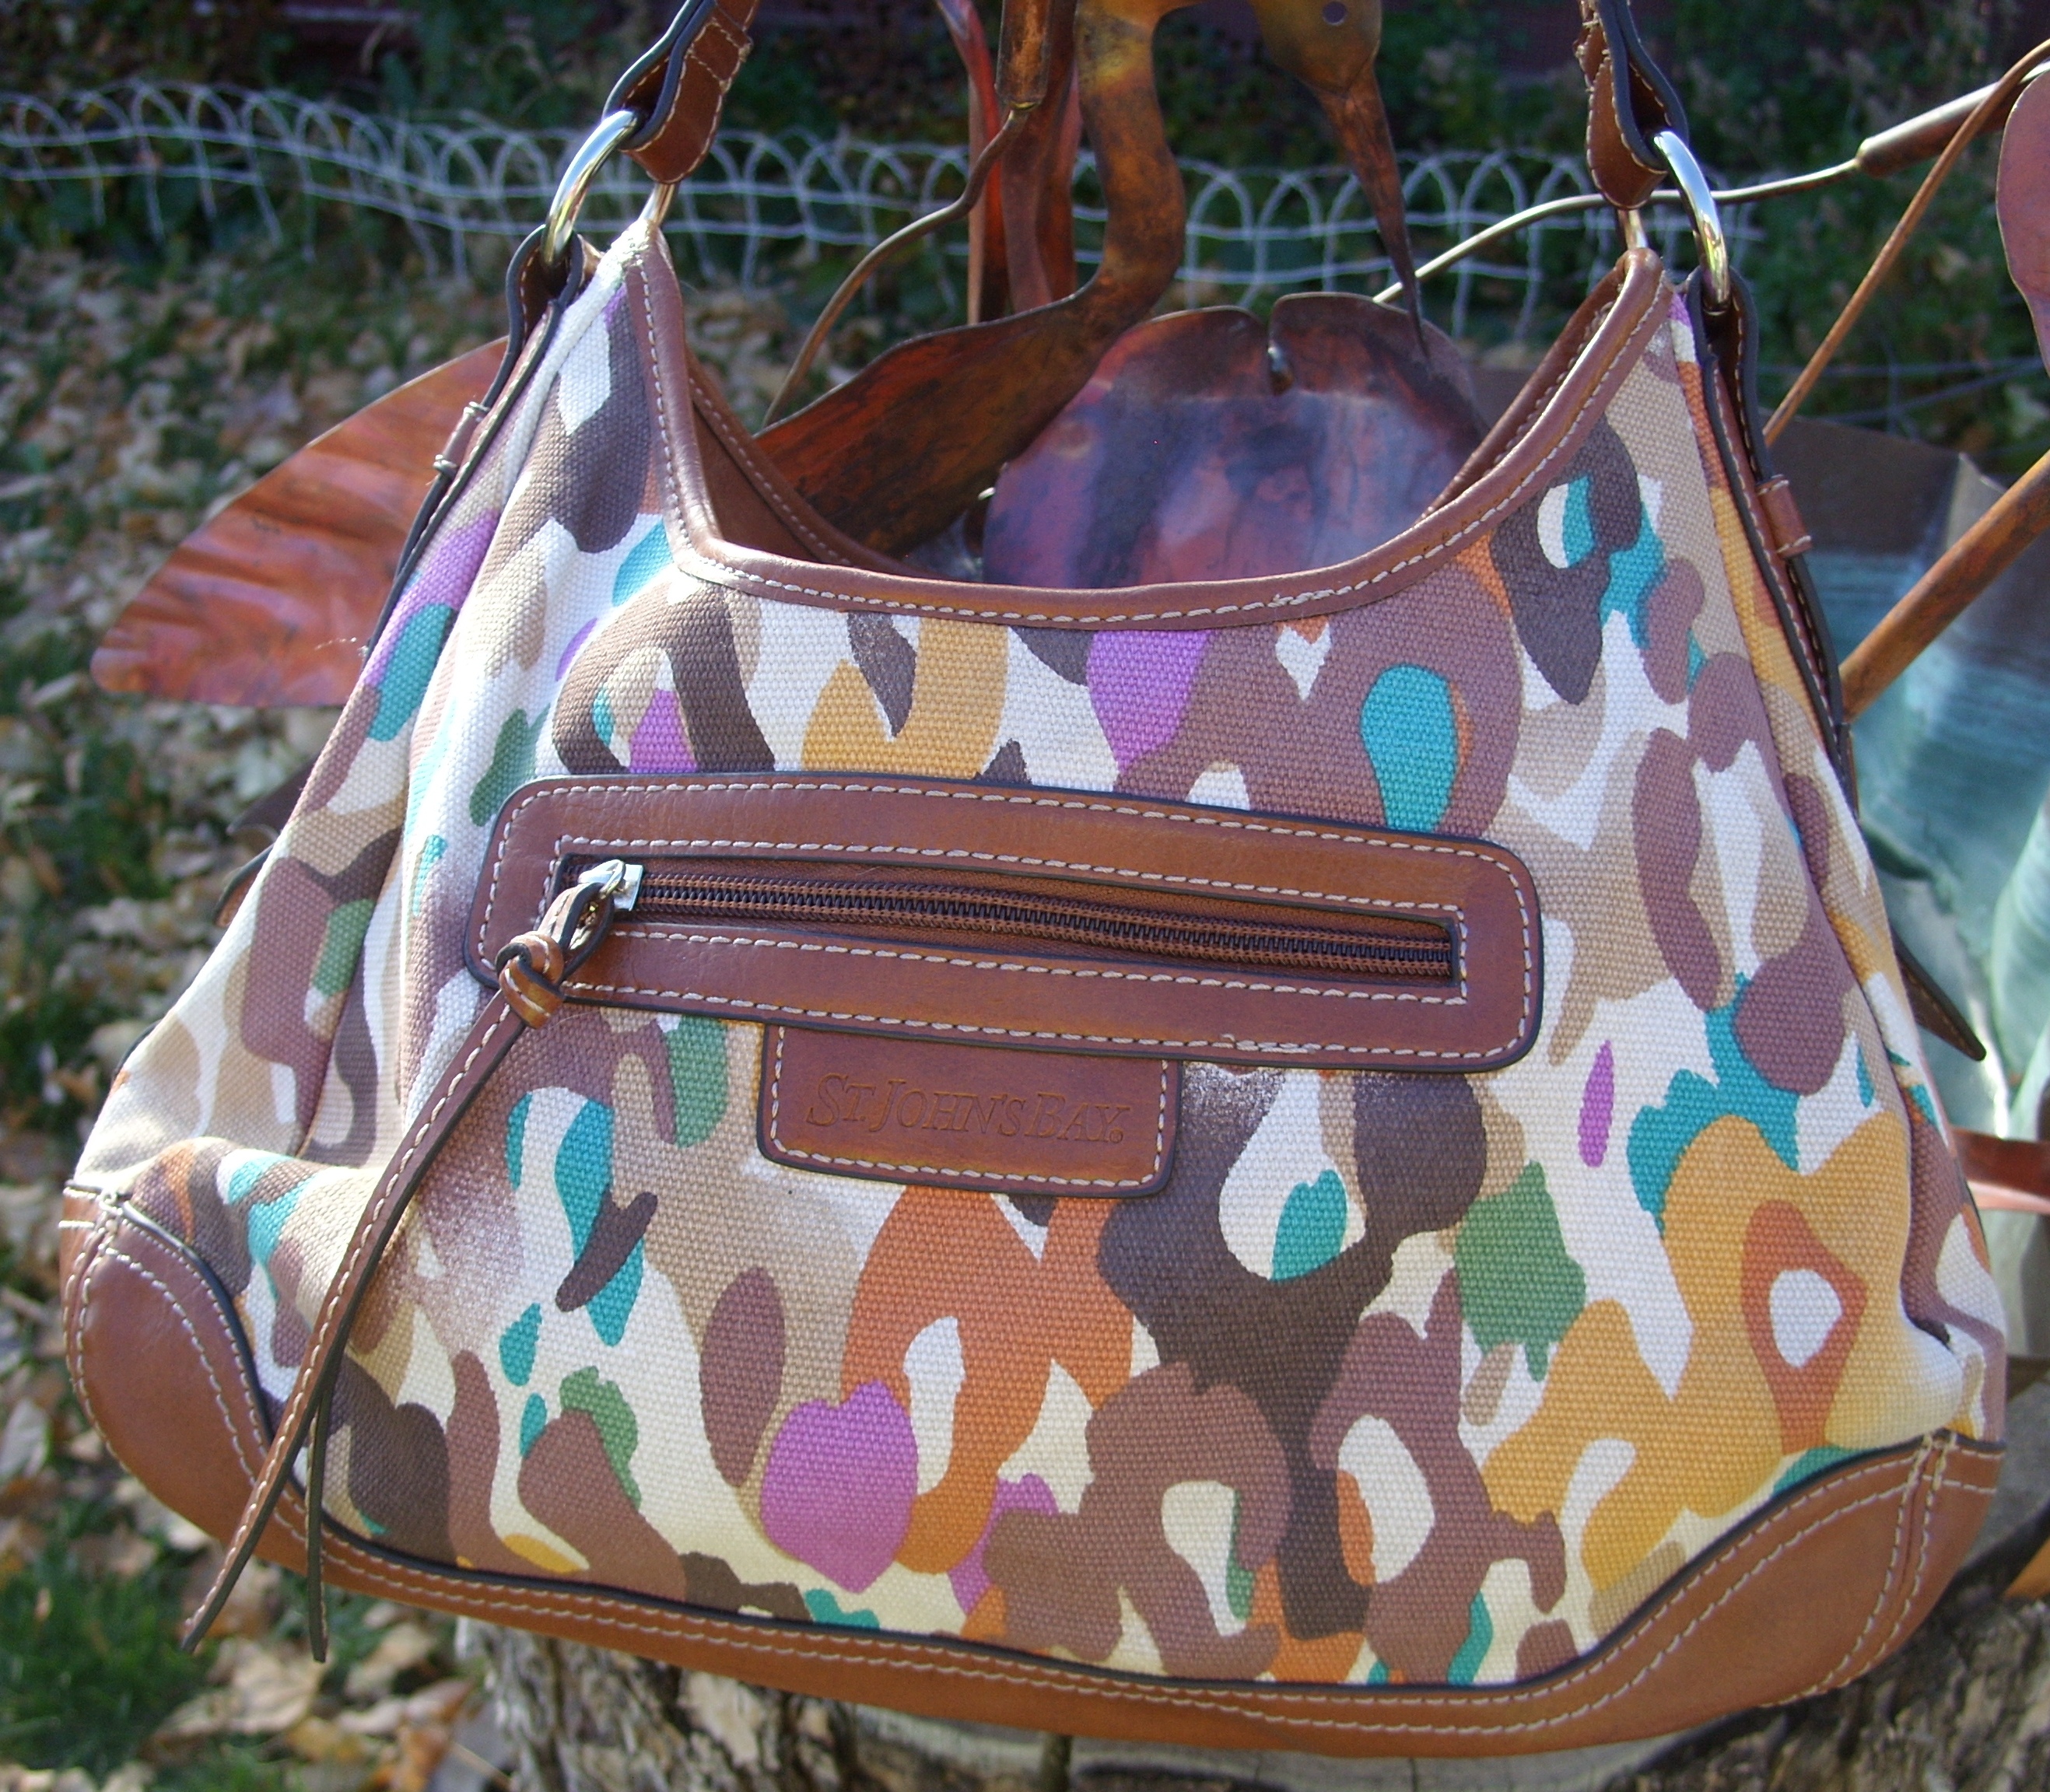 File:Hobo bag with abstract print.JPG - Wikimedia Commons